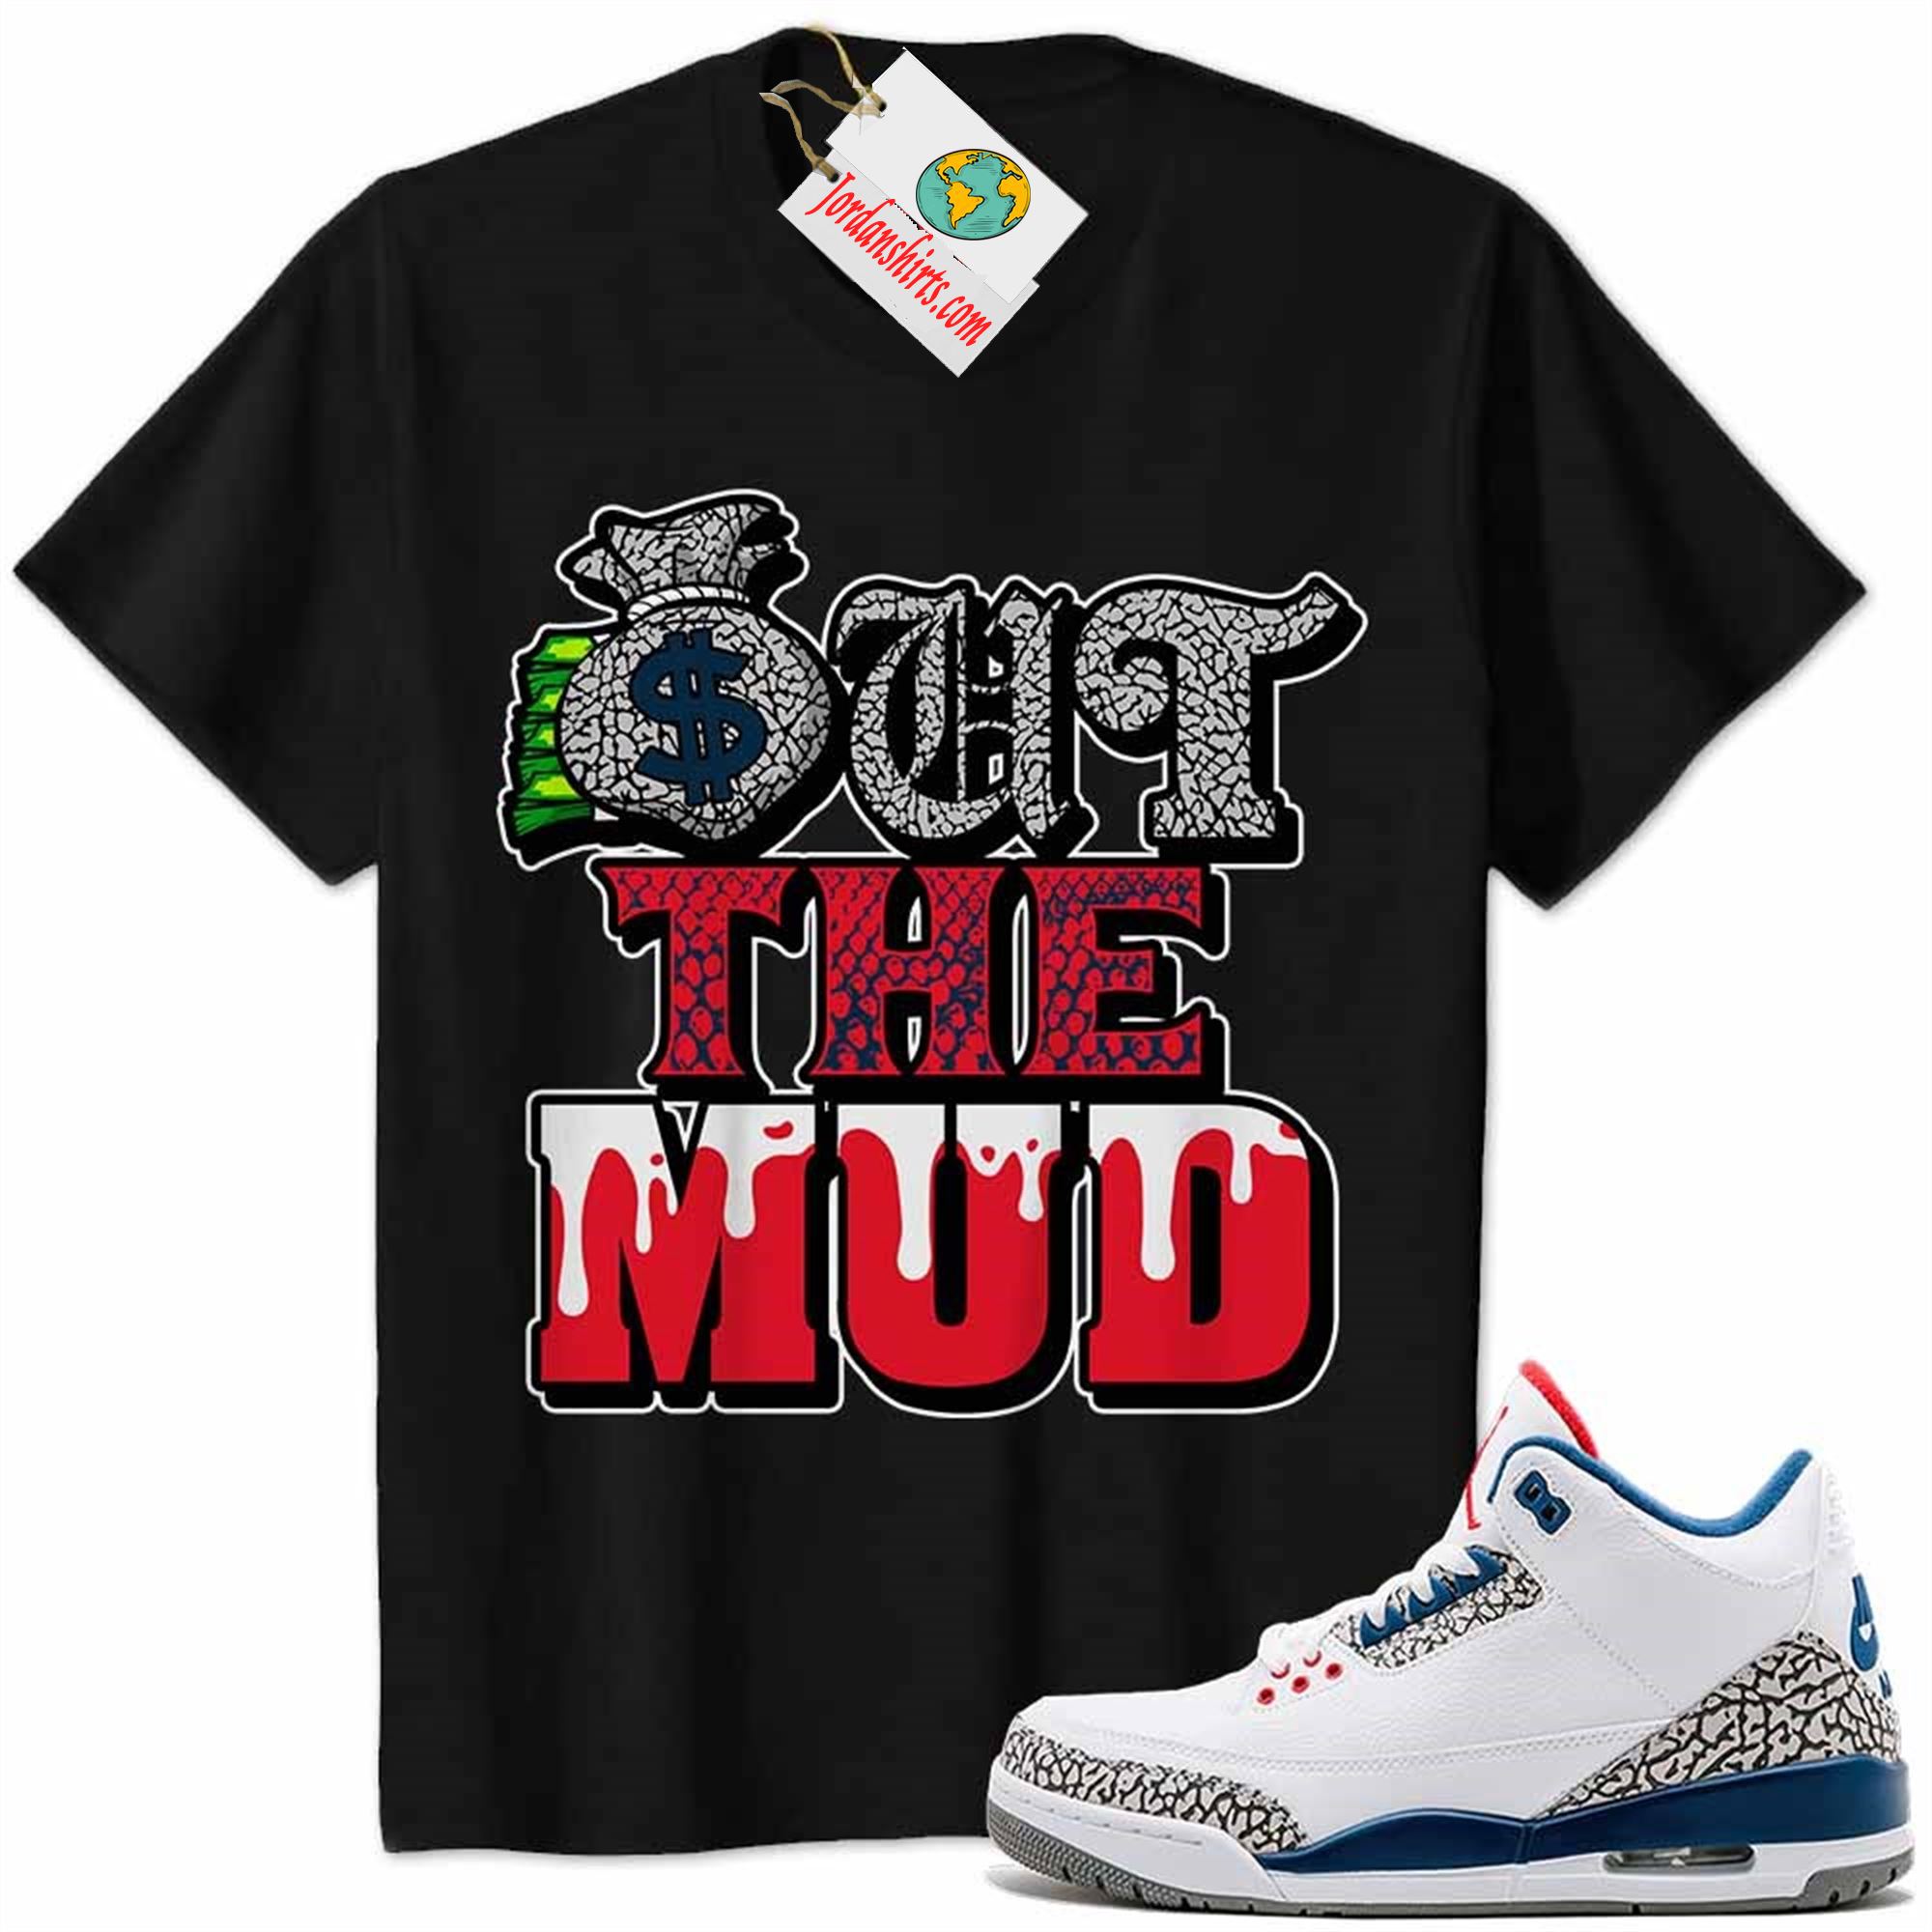 Jordan 3 Shirt, Jordan 3 True Blue Shirt Out The Mud Money Bag Black Plus Size Up To 5xl